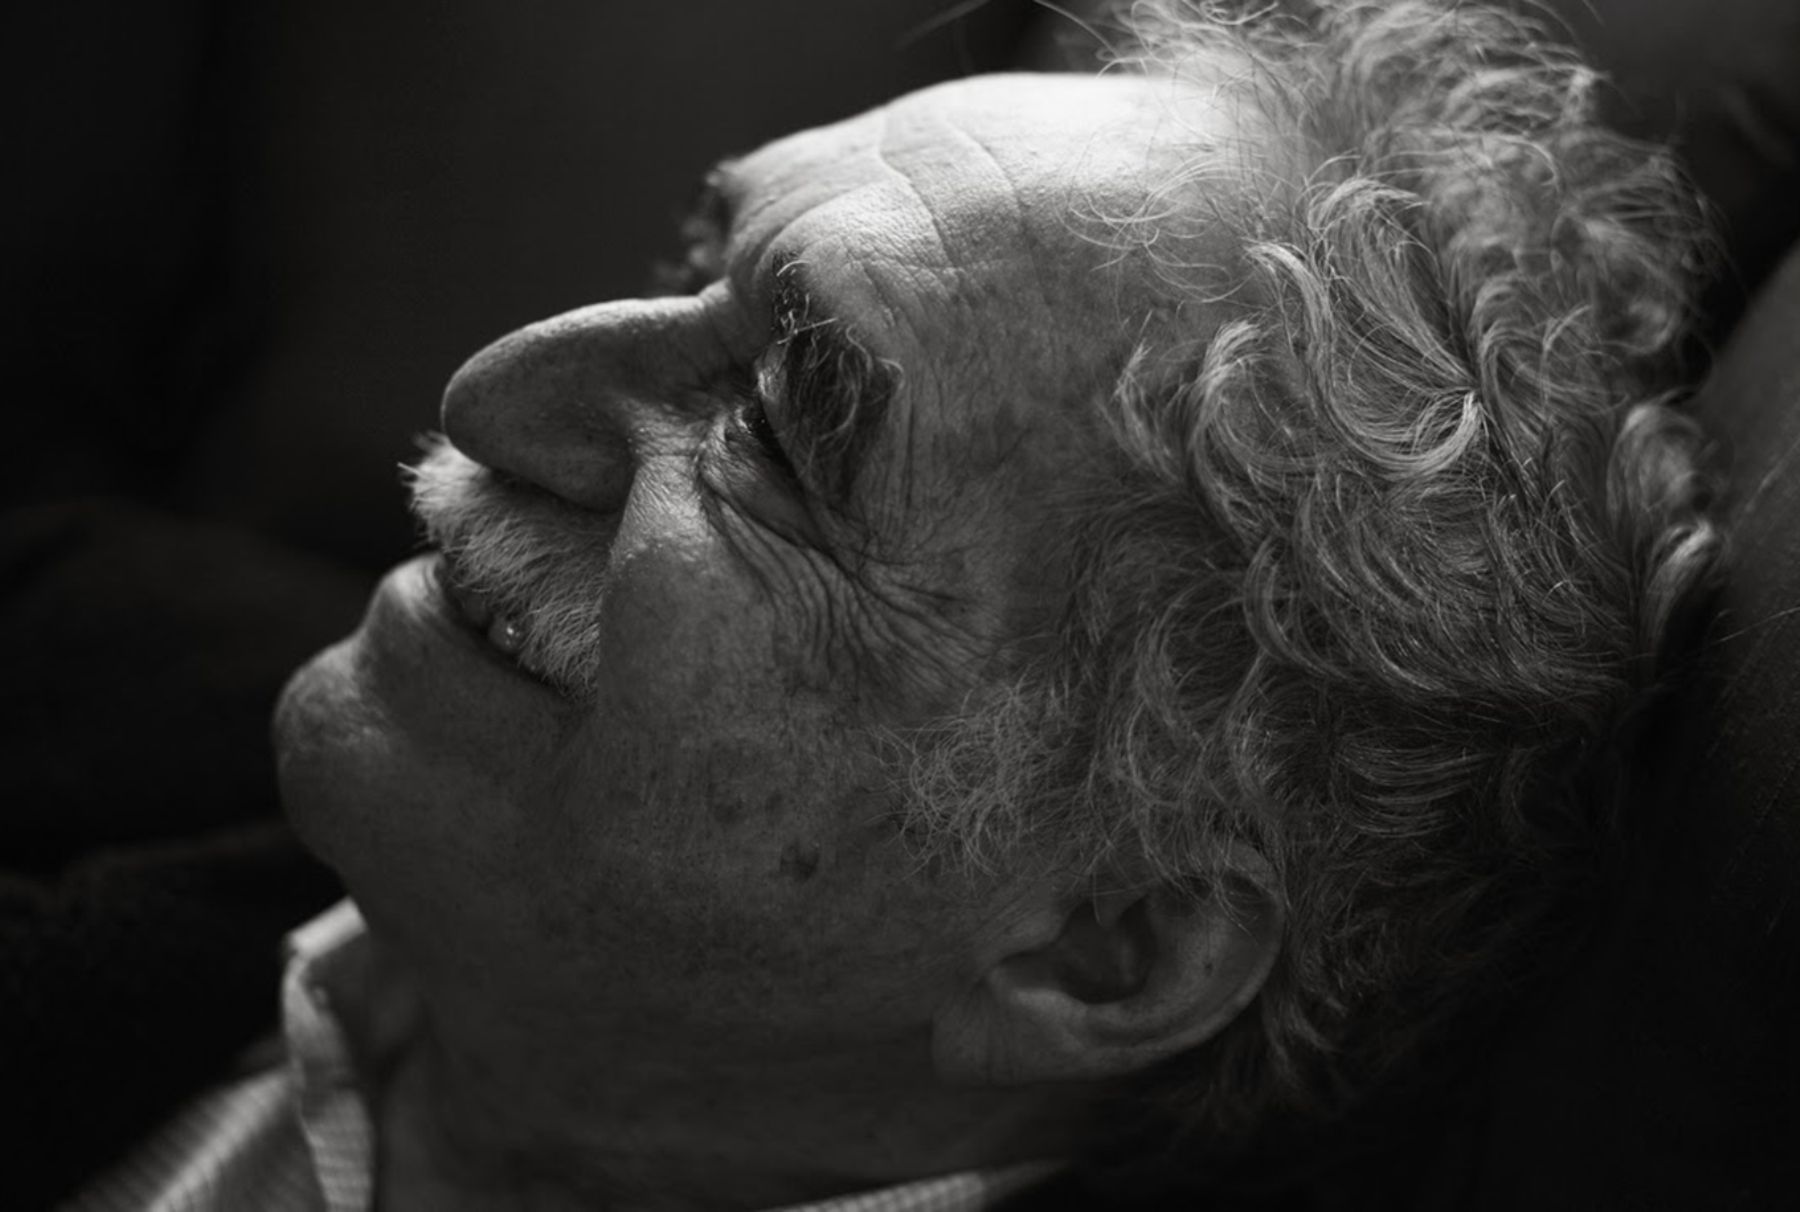 1982 Nobel Prize Laureate Gabriel Garcia Marquez